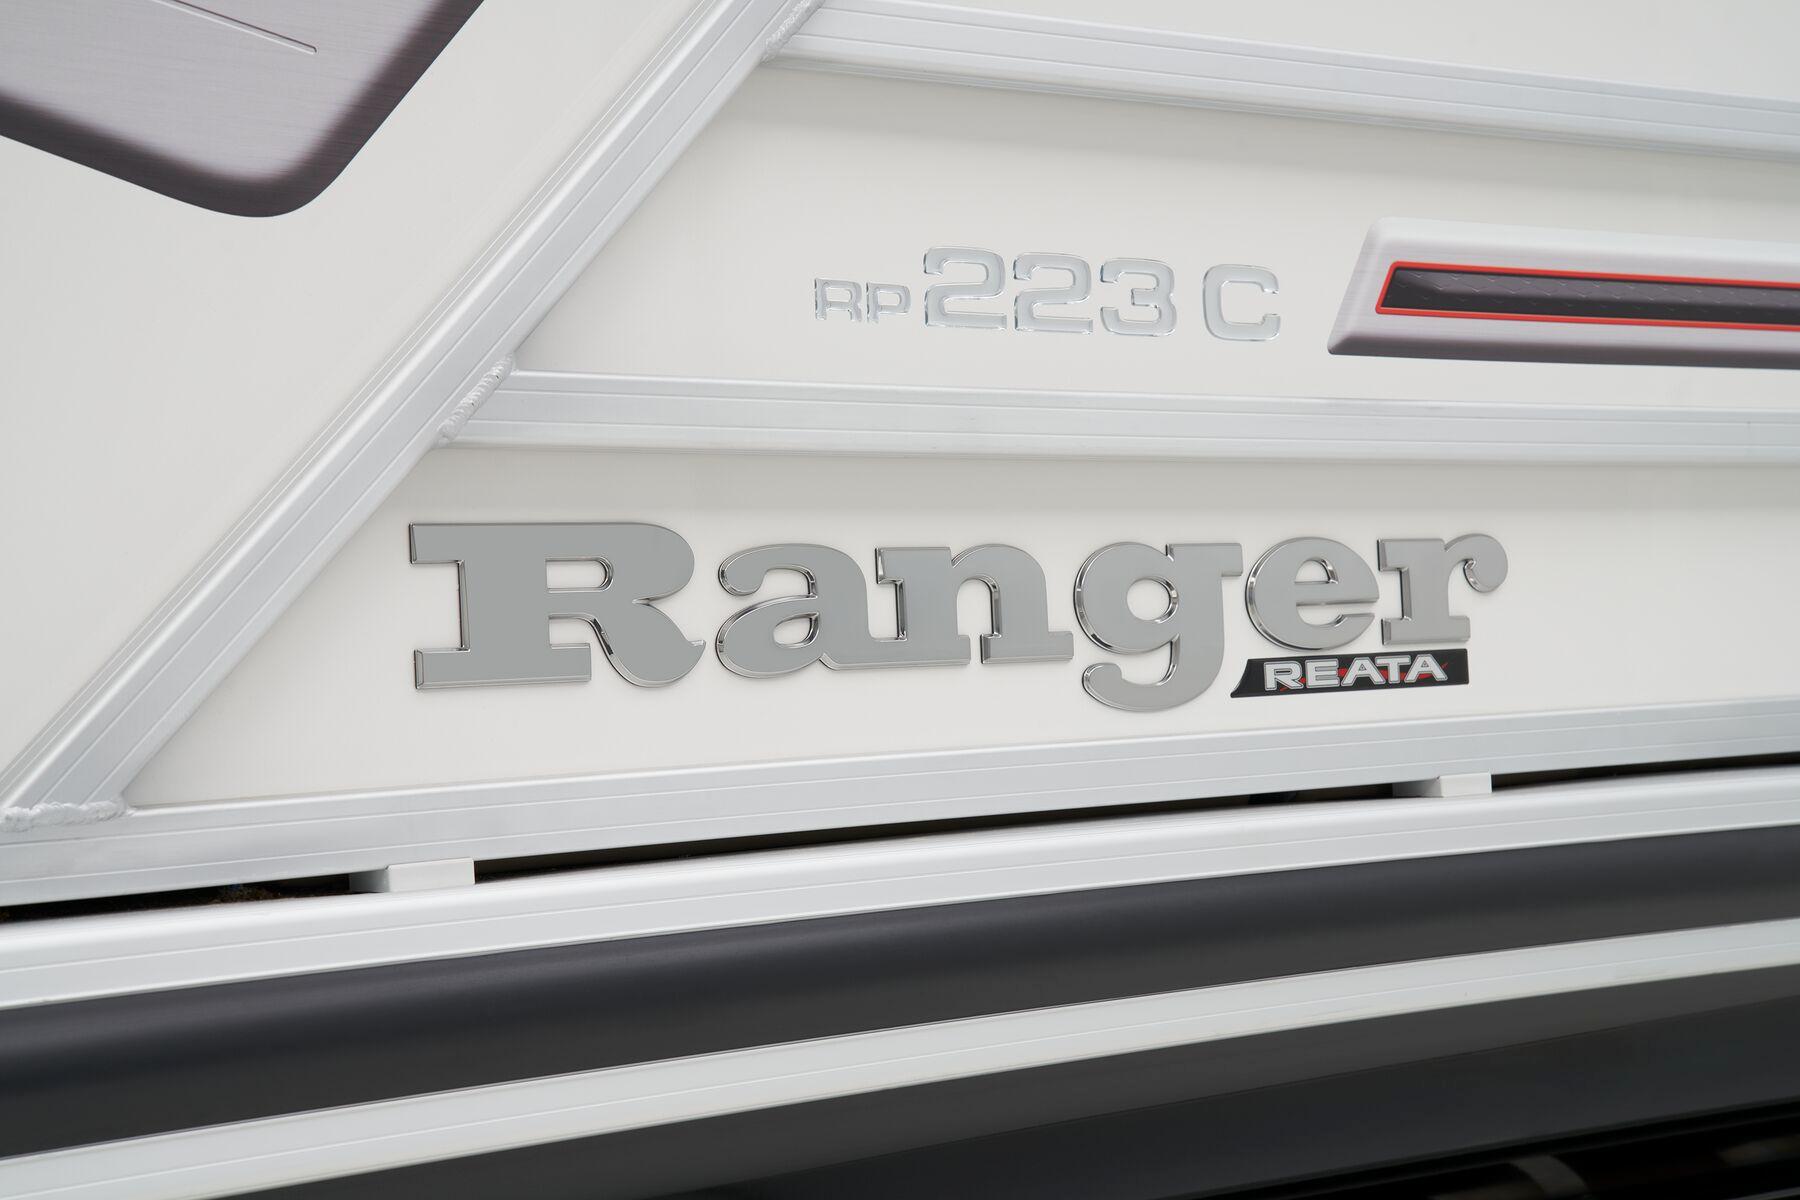 Ranger Reata 223C